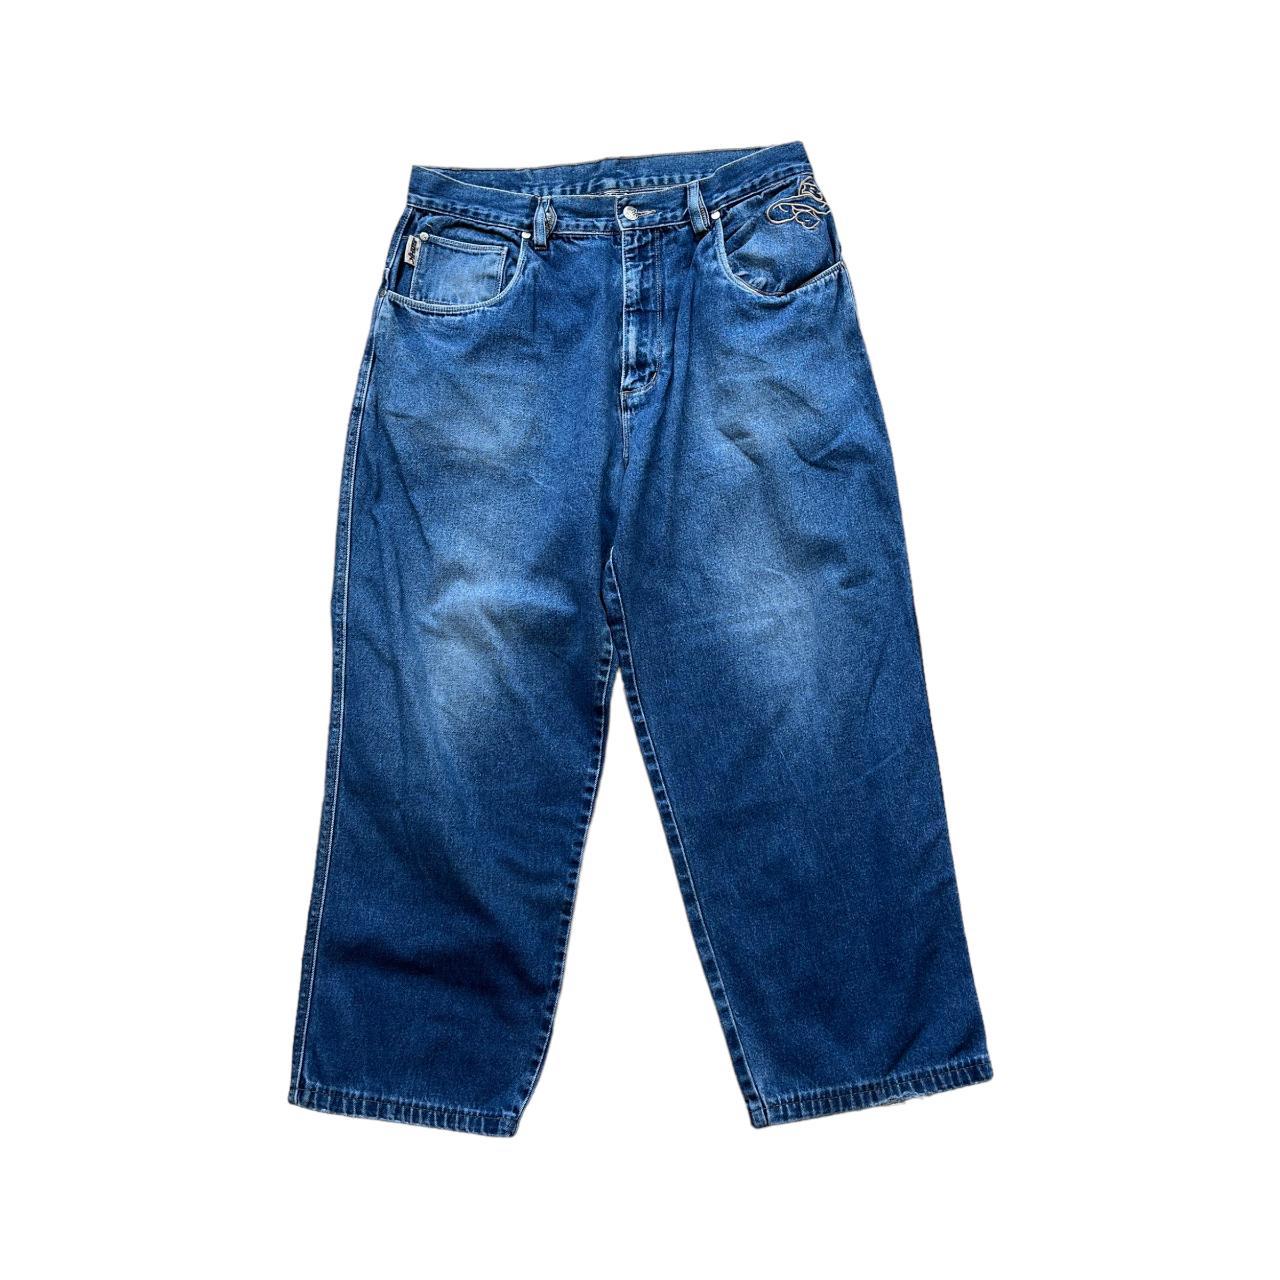 Sohk hard knocks BOLO blue jeans W34 Waist-... - Depop